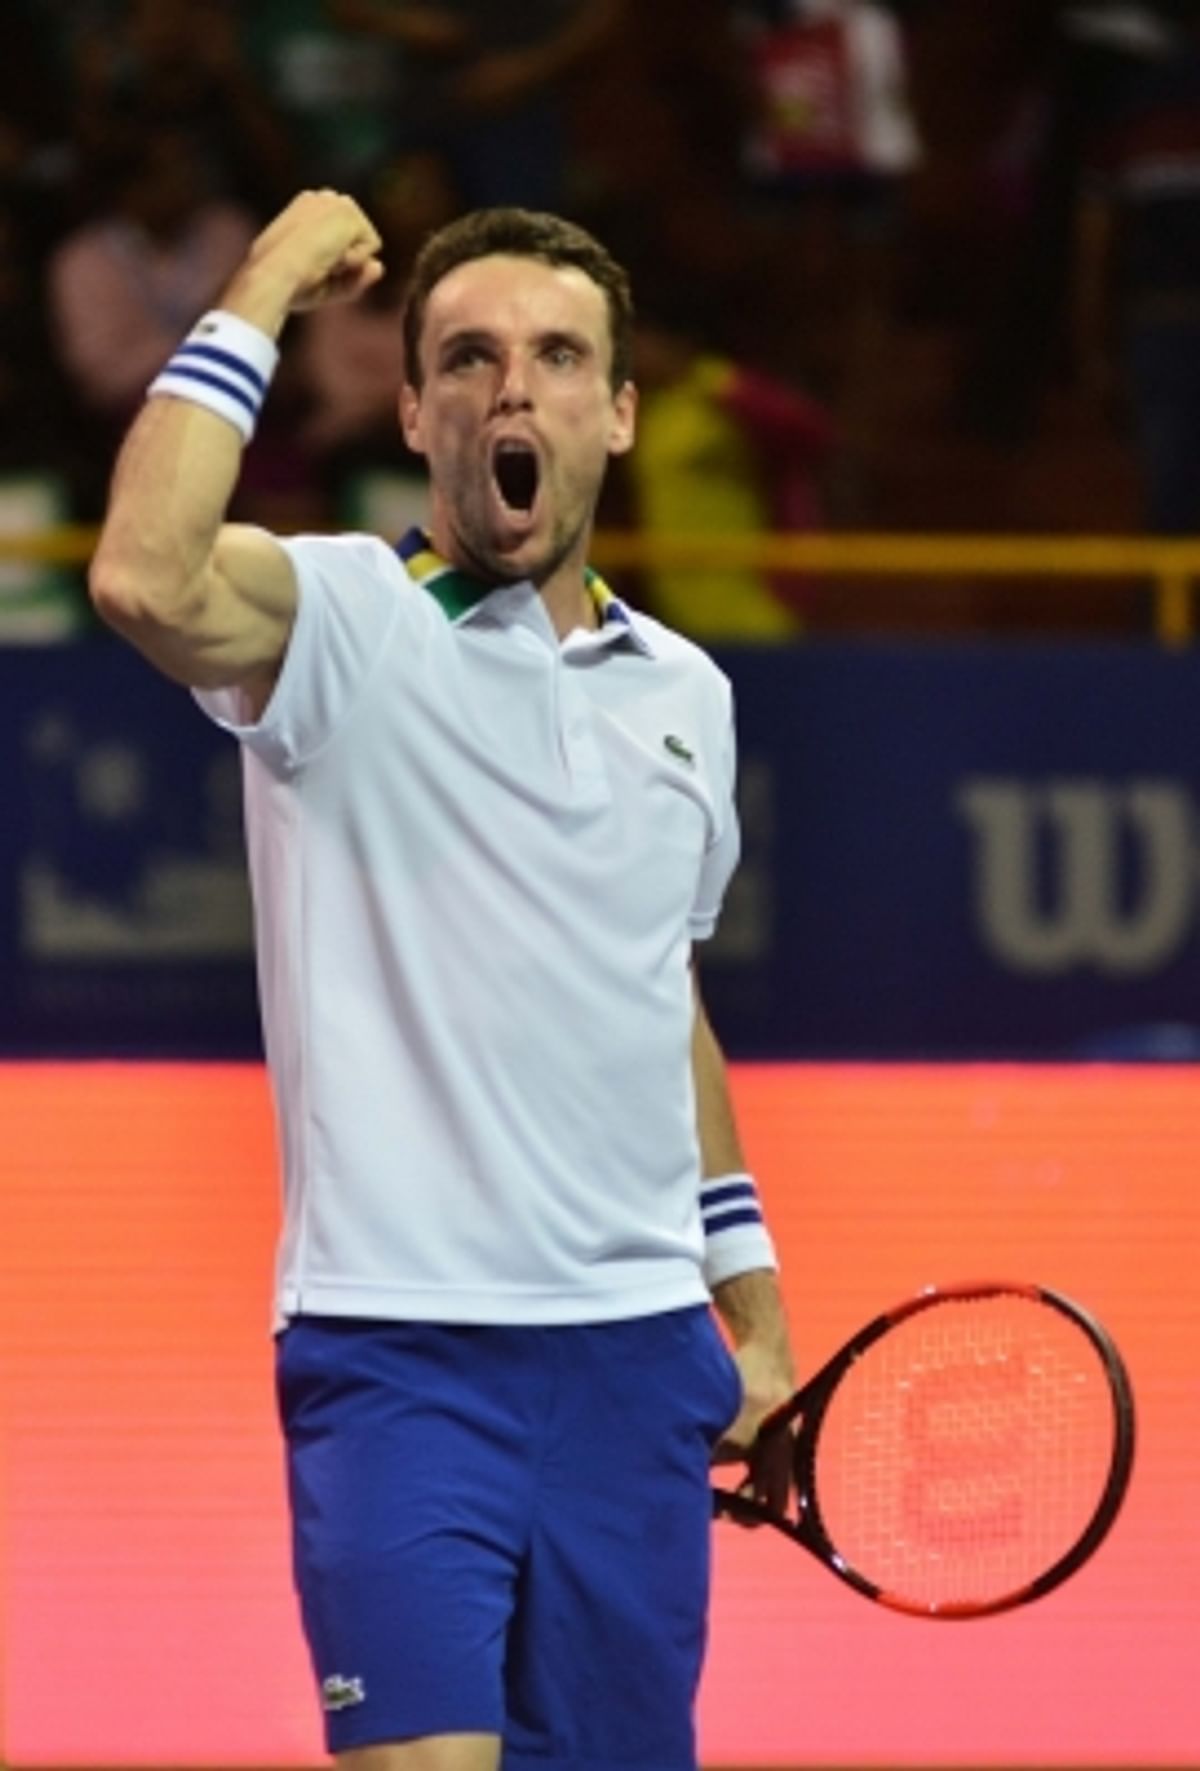 Spain's Agut wins 2018 Dubai Tennis Open